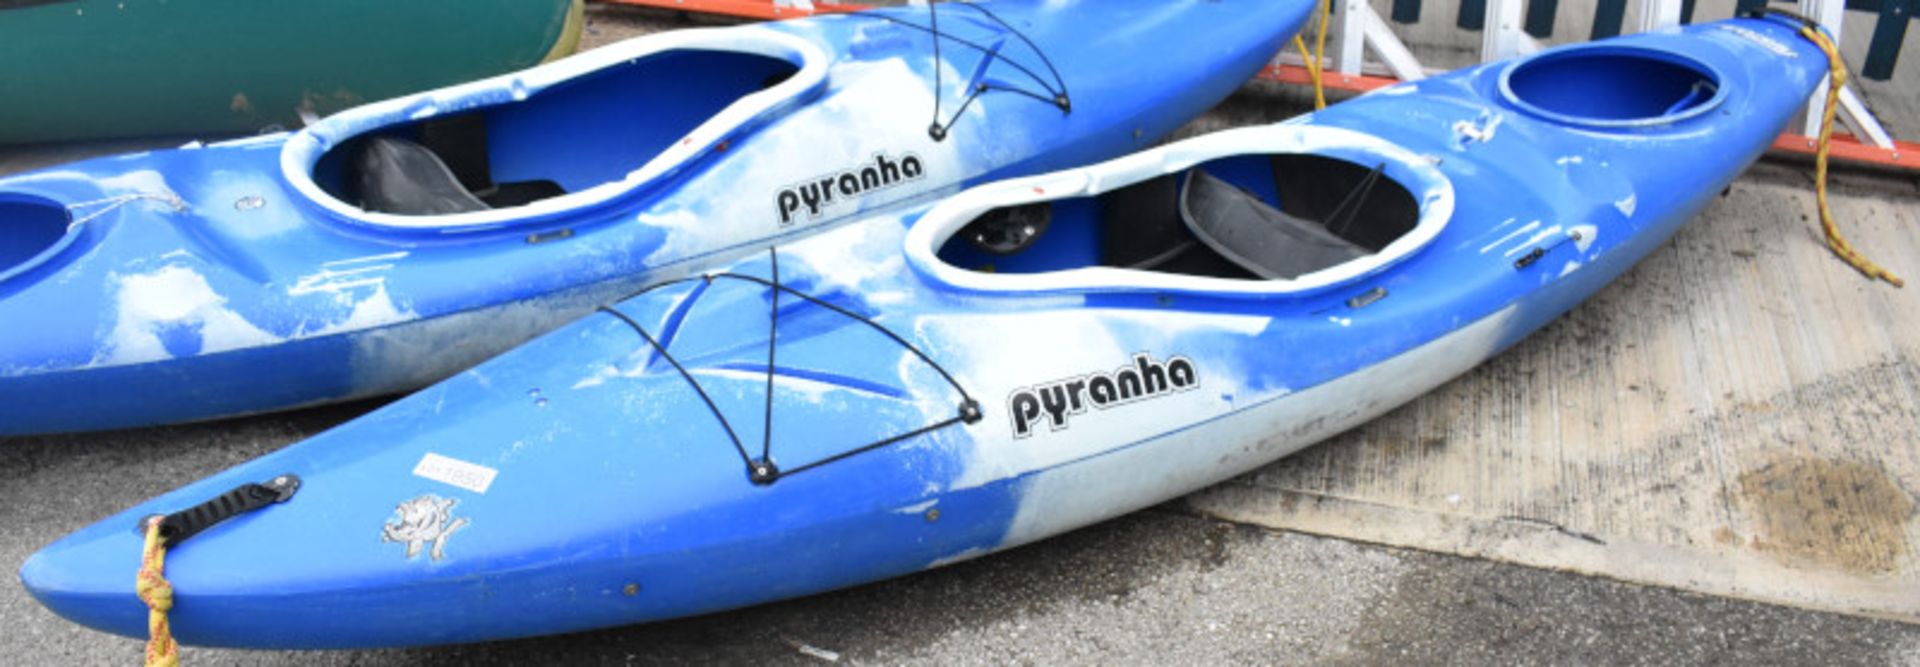 Pyrahna Fusion kayak - no paddles - blue / white